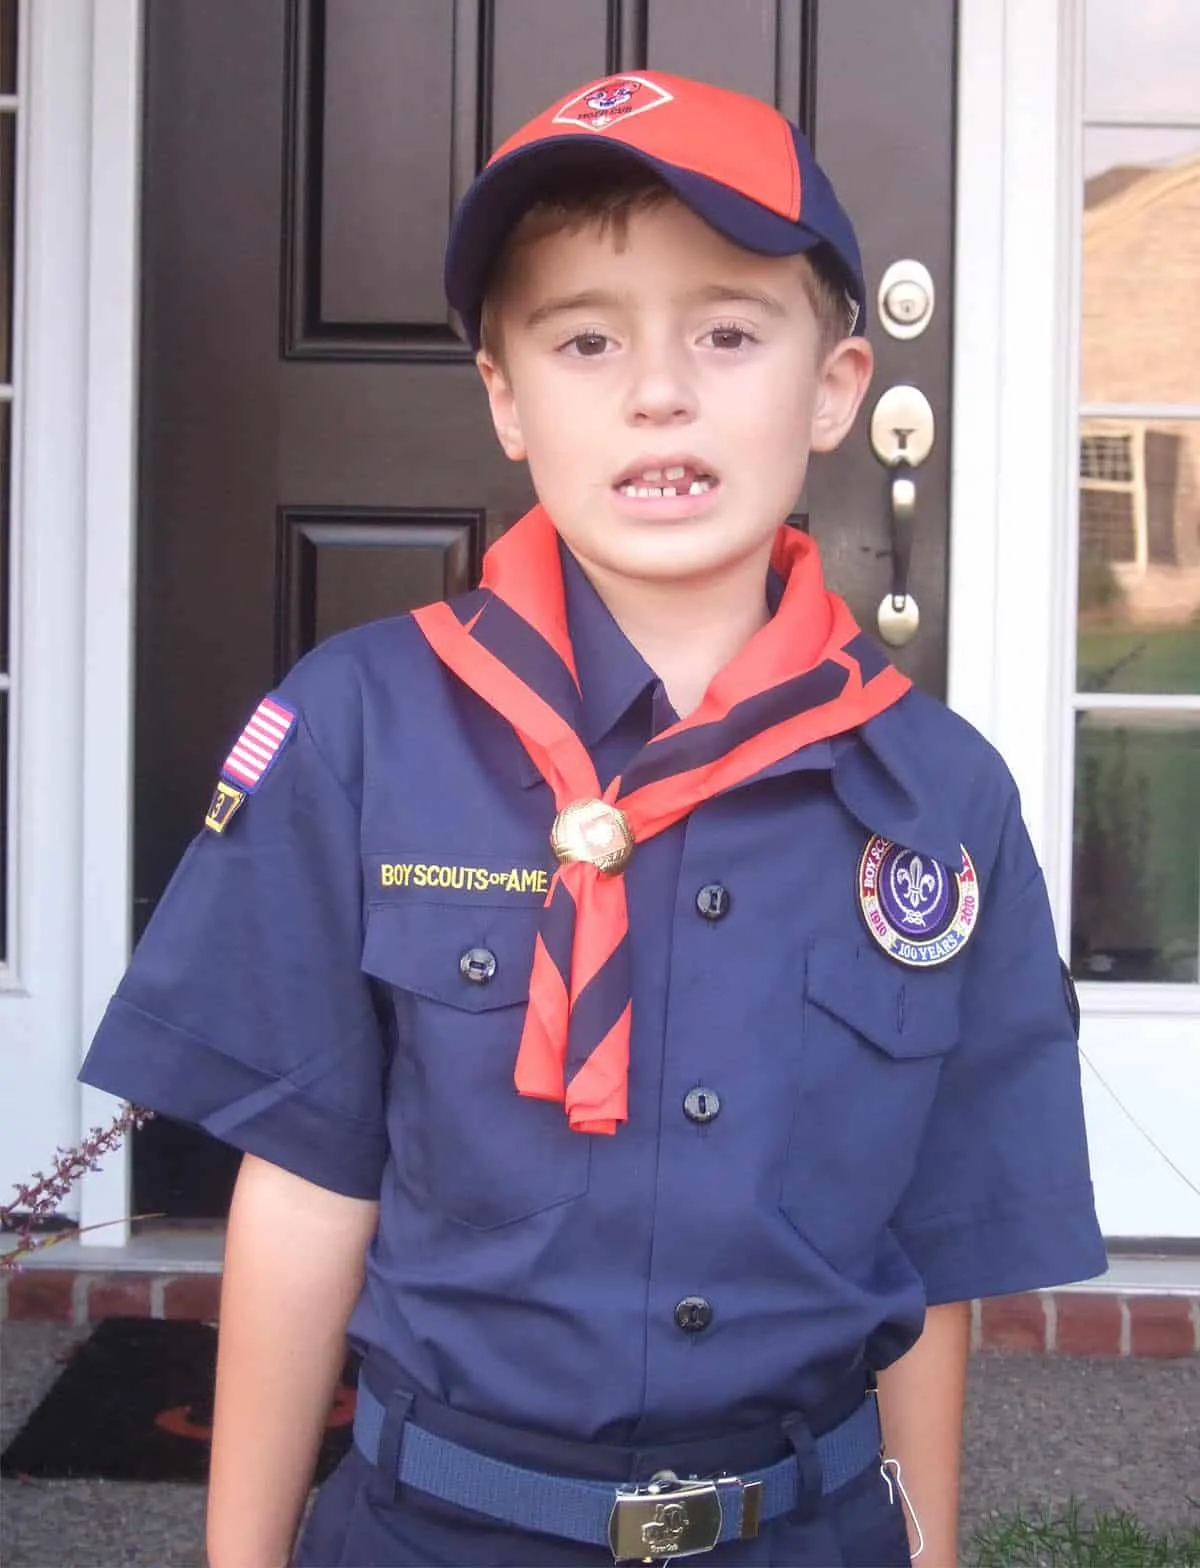 cub scouts uniform